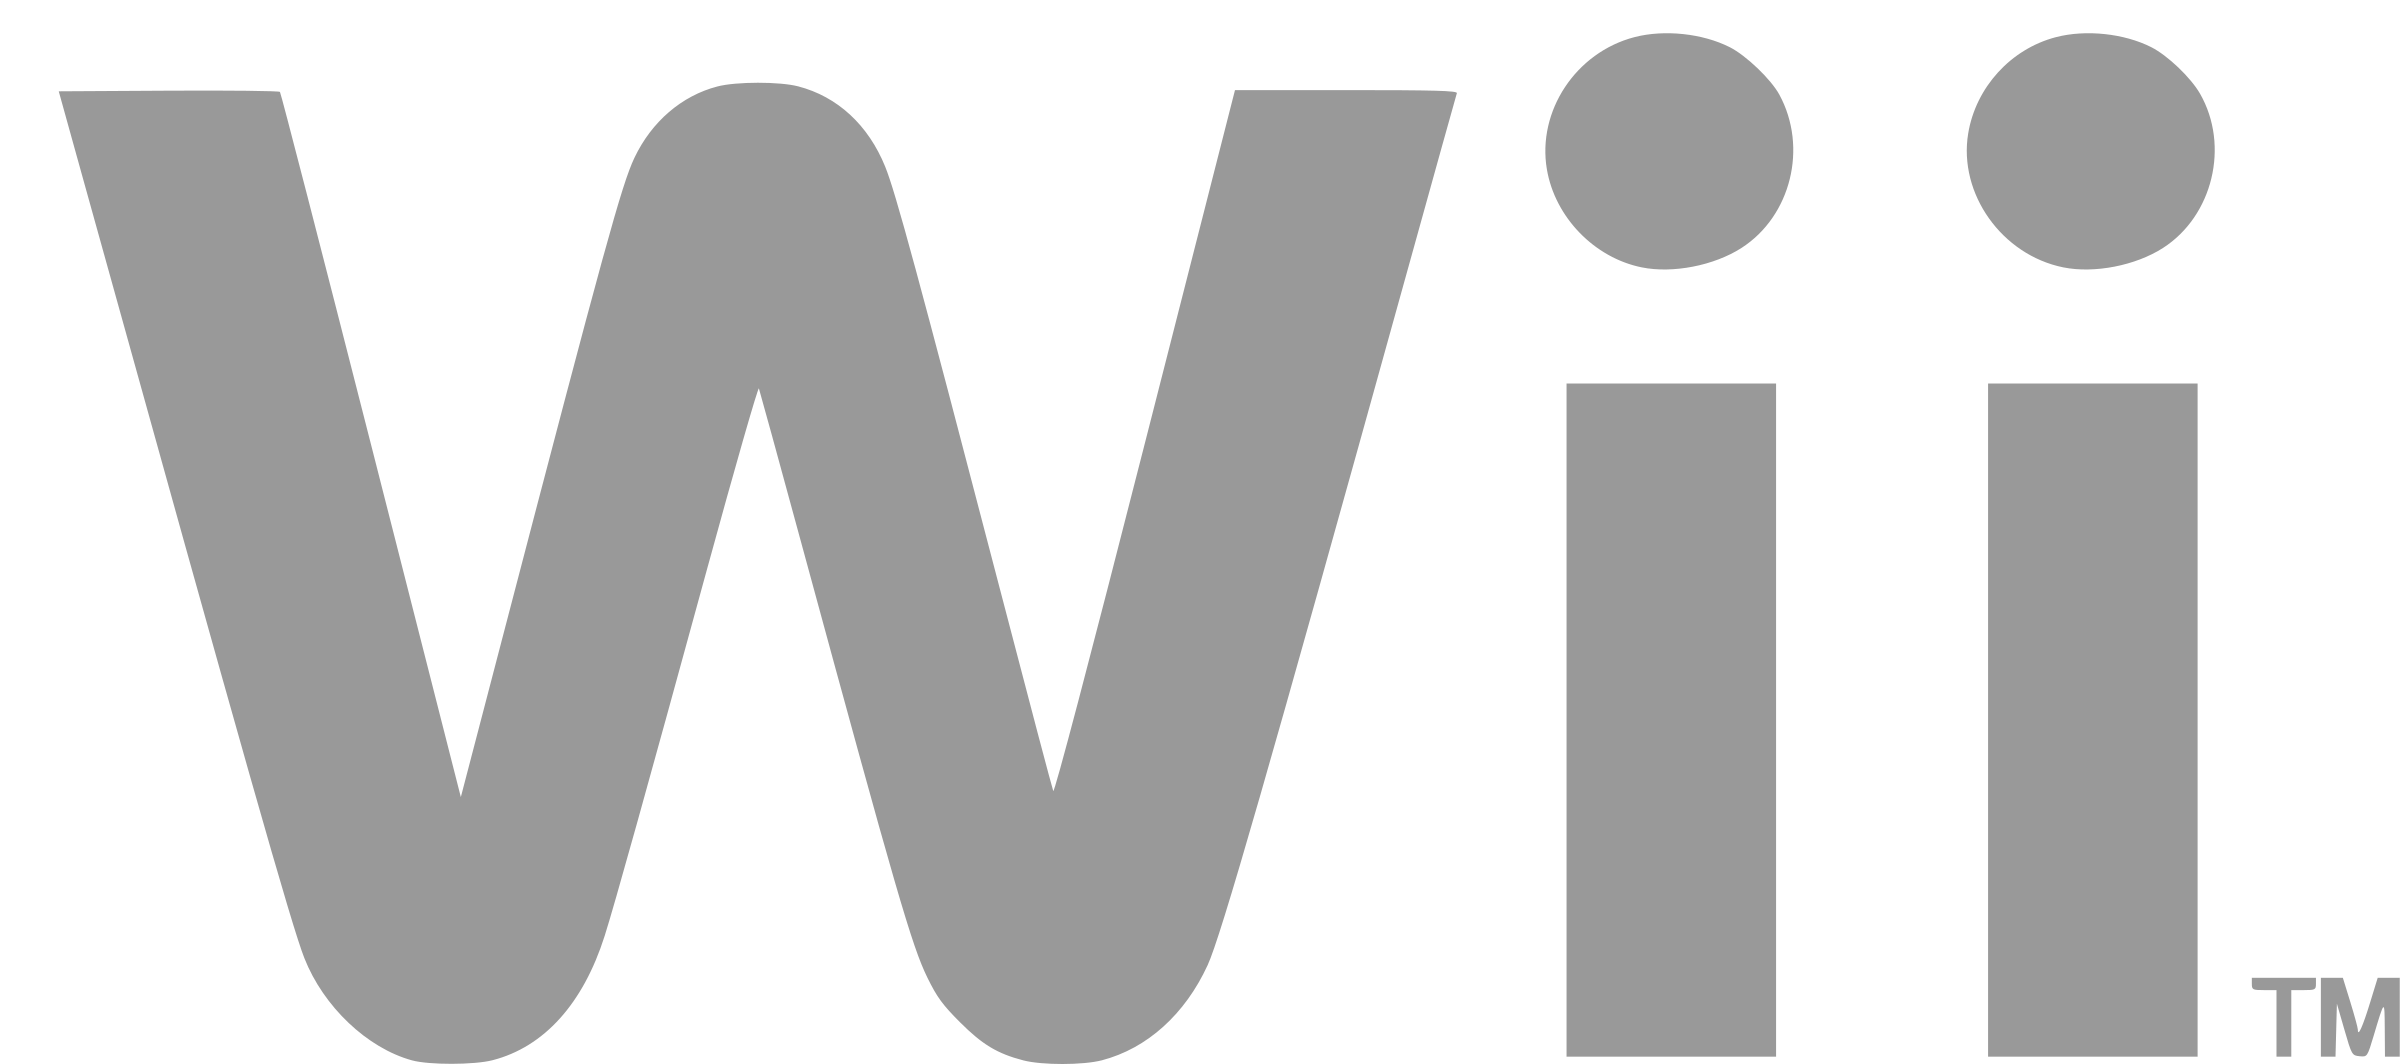 Wii Logo PNG File